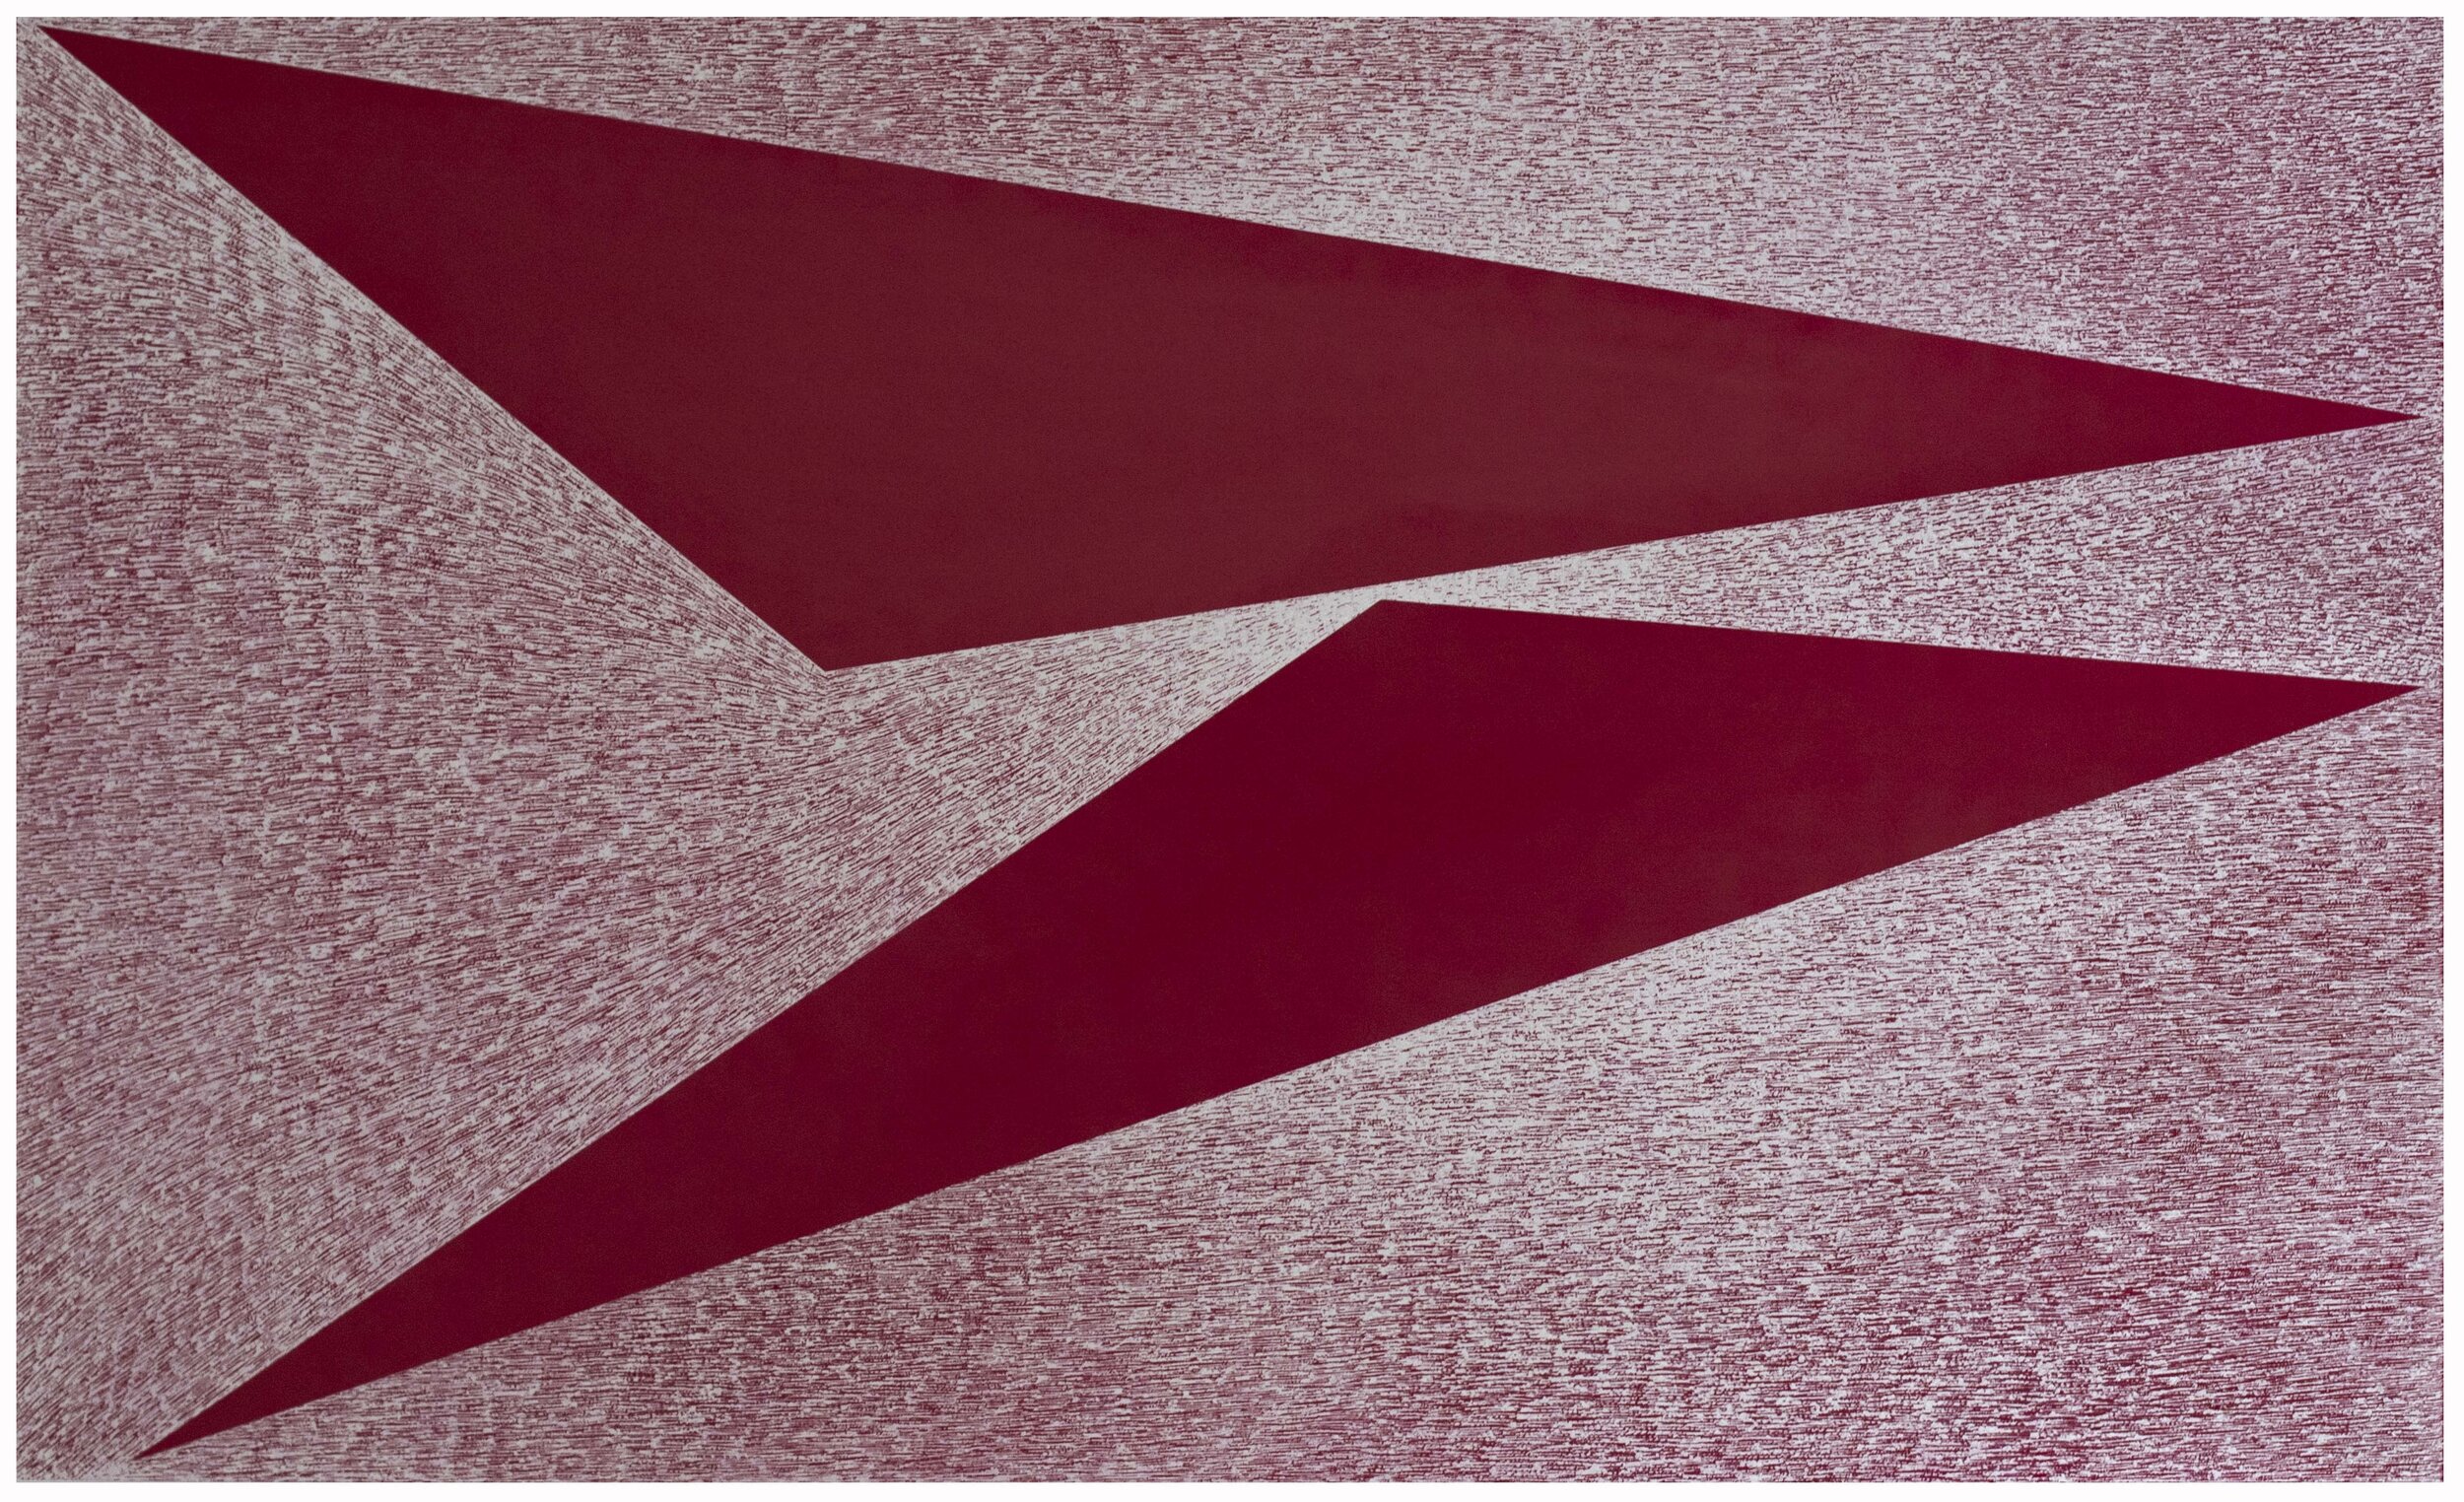 Red, Paper Airplane 2021.jpg